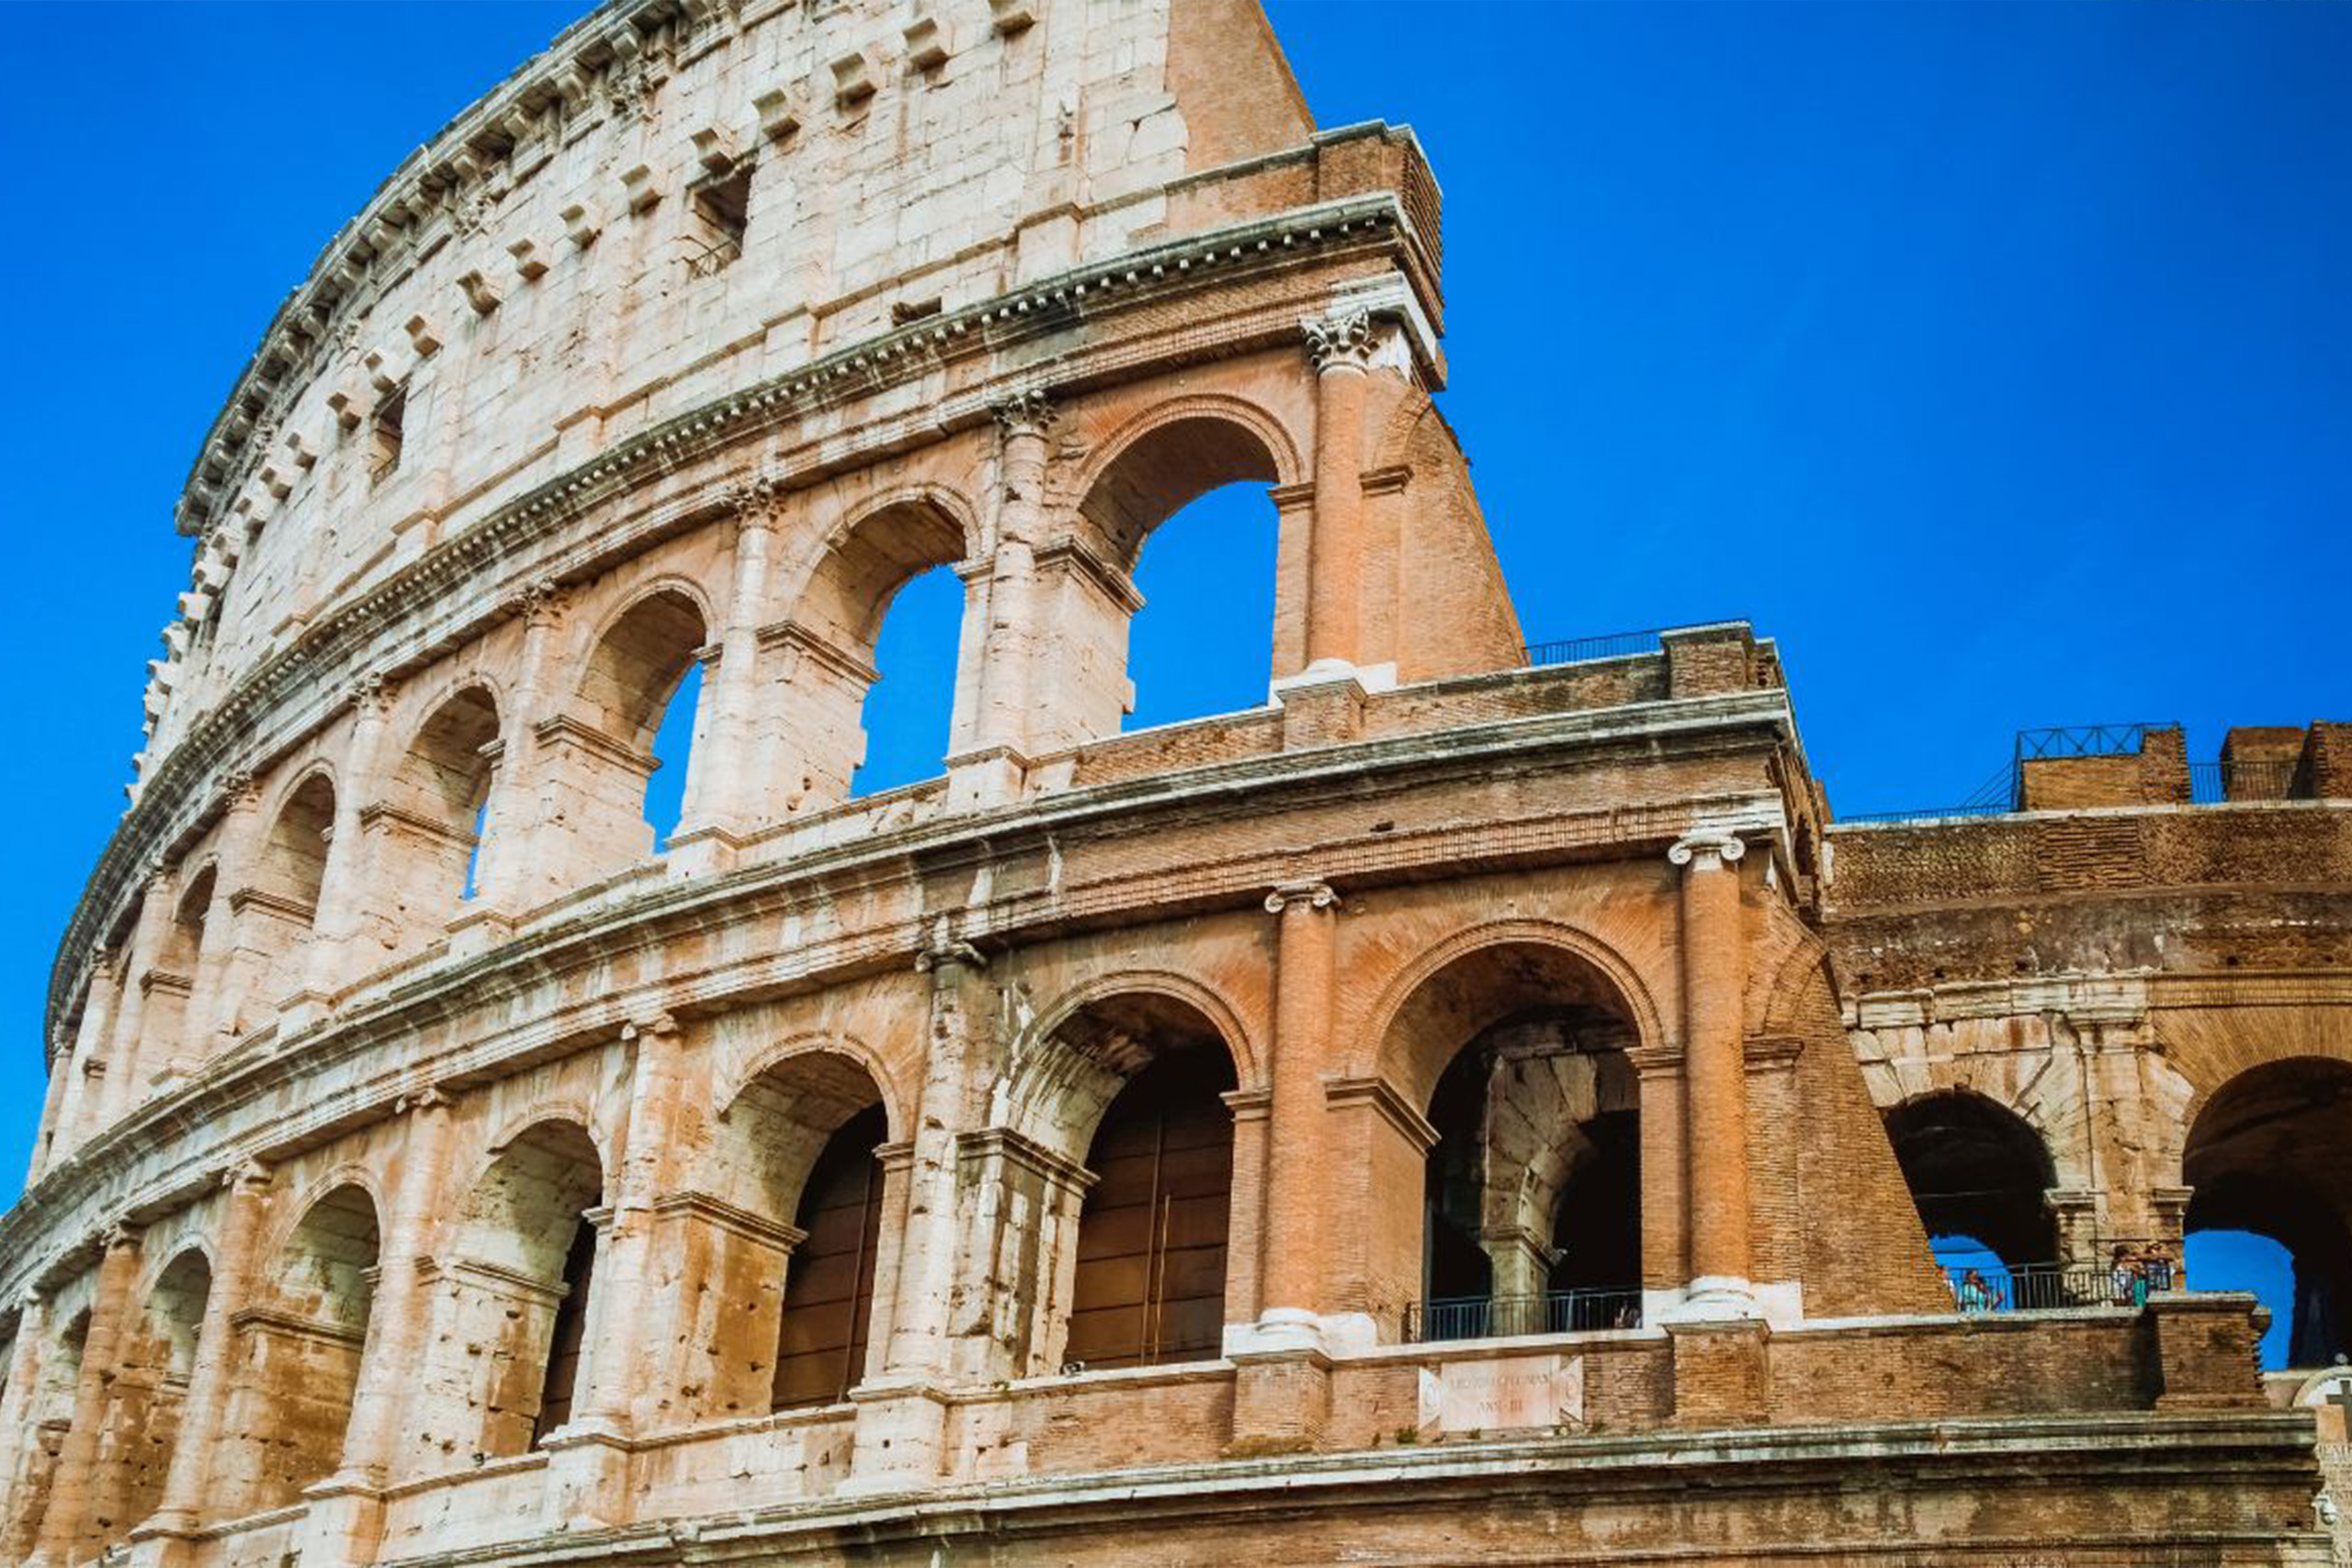  A Journey Through Rome's Historic Sites